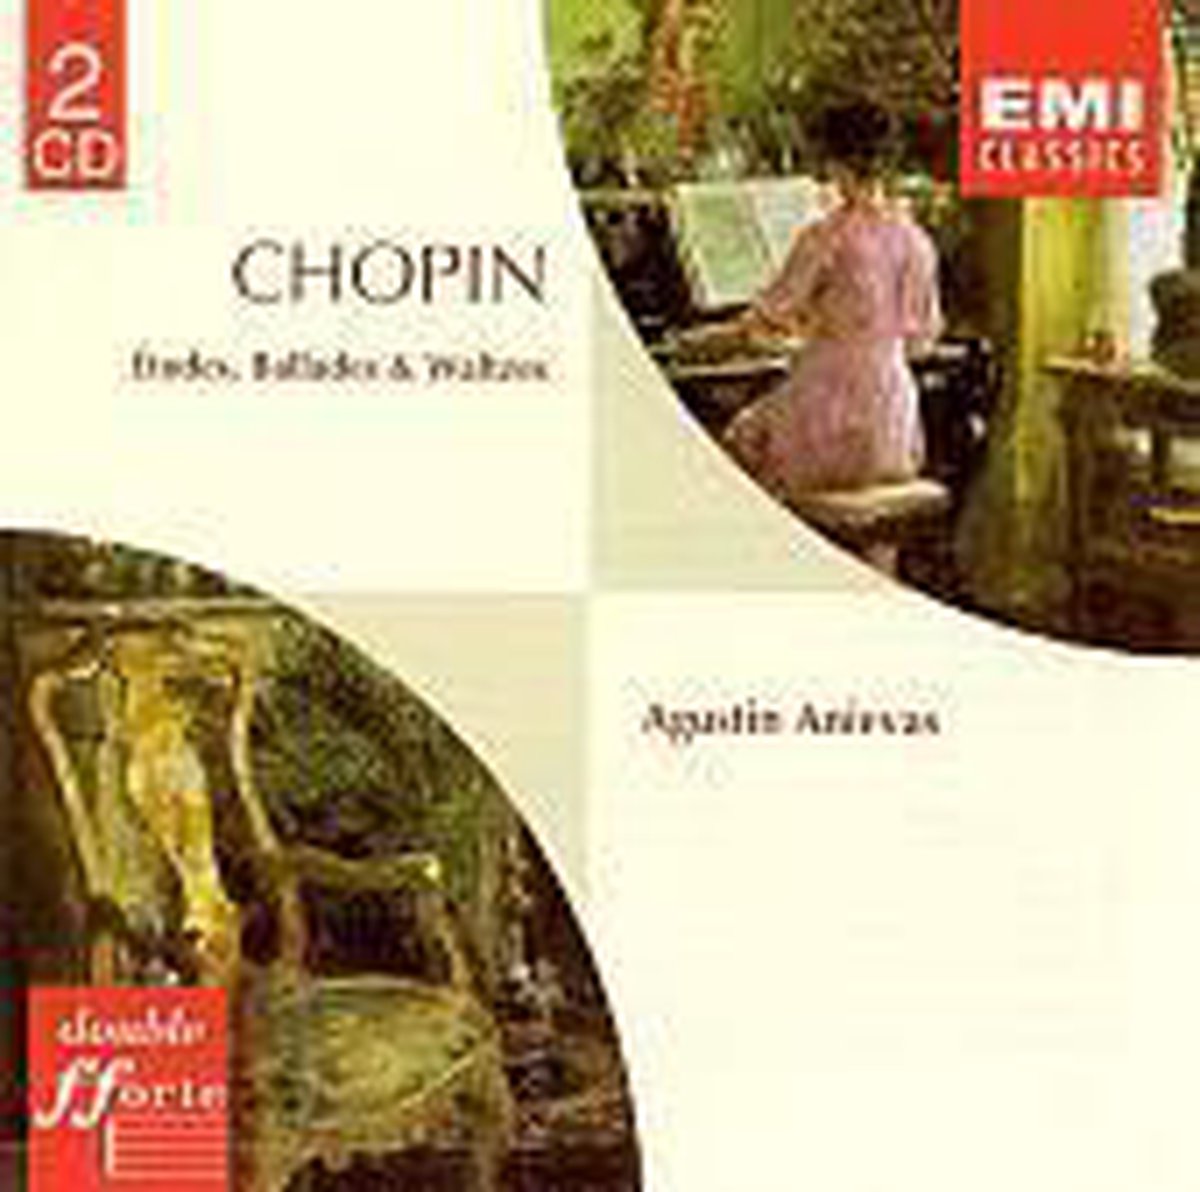 Chopin: etudes, Ballades & Waltzes / Agustin Anievas - Agustín Anievas